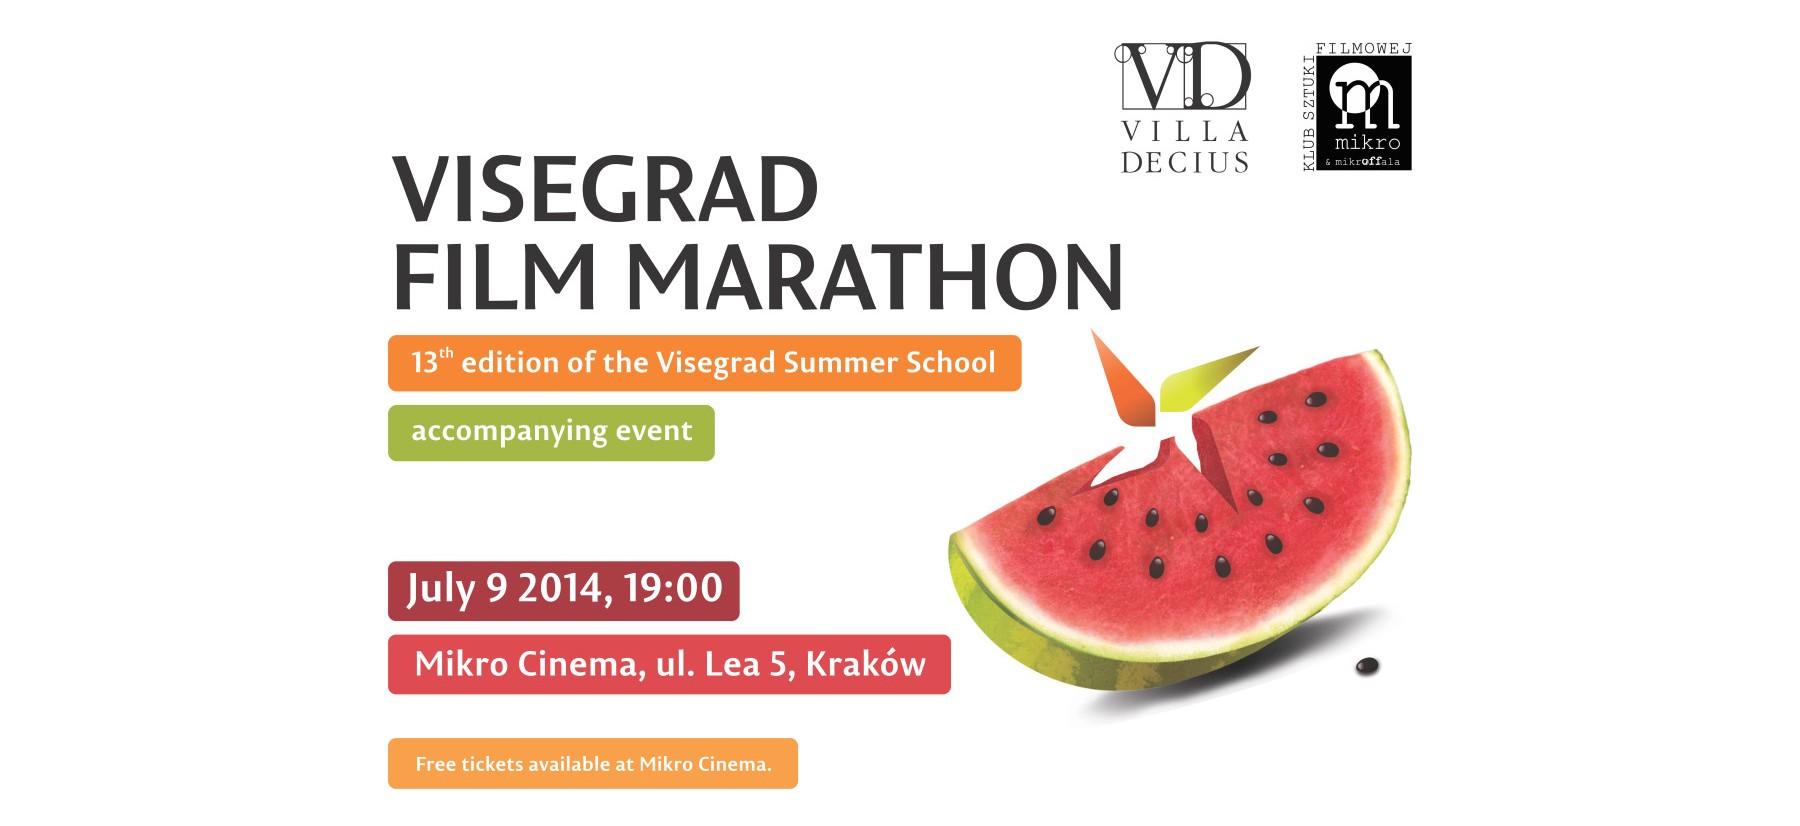 Invitation to the Visegrad Film Marathon